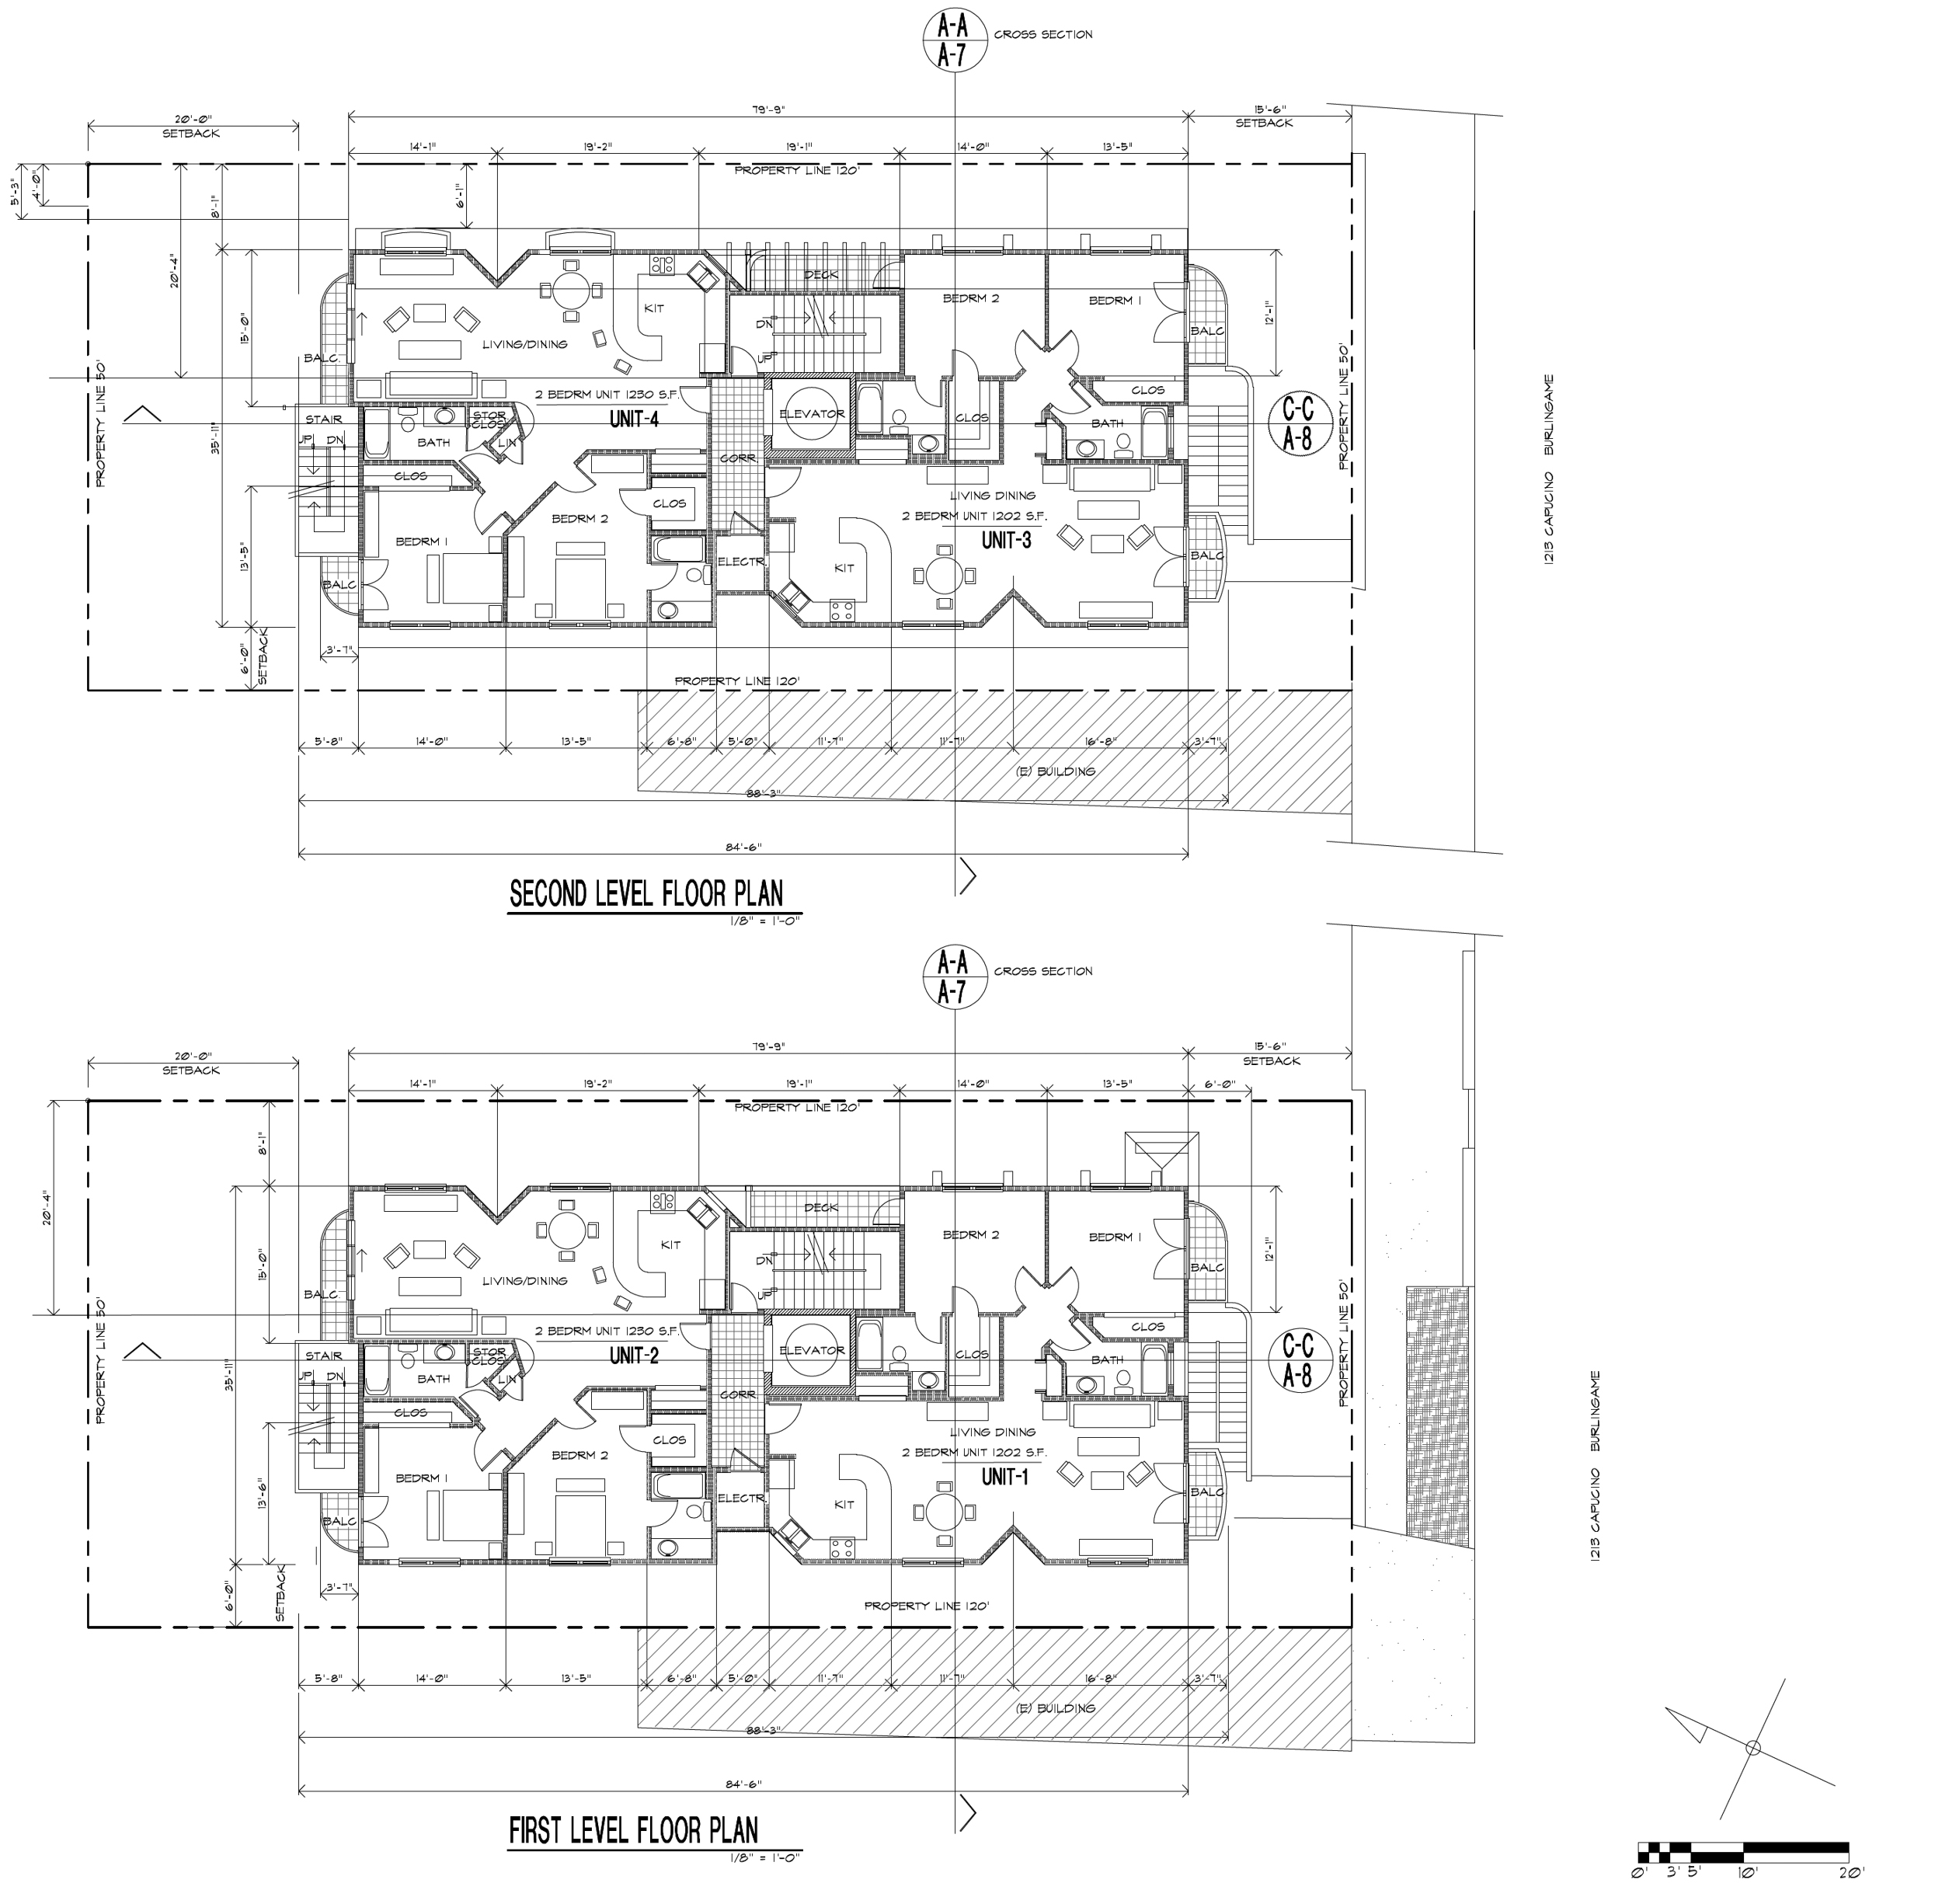 1213 Capuchino Avenue floor plans, rendering by Antonio M. Brandi